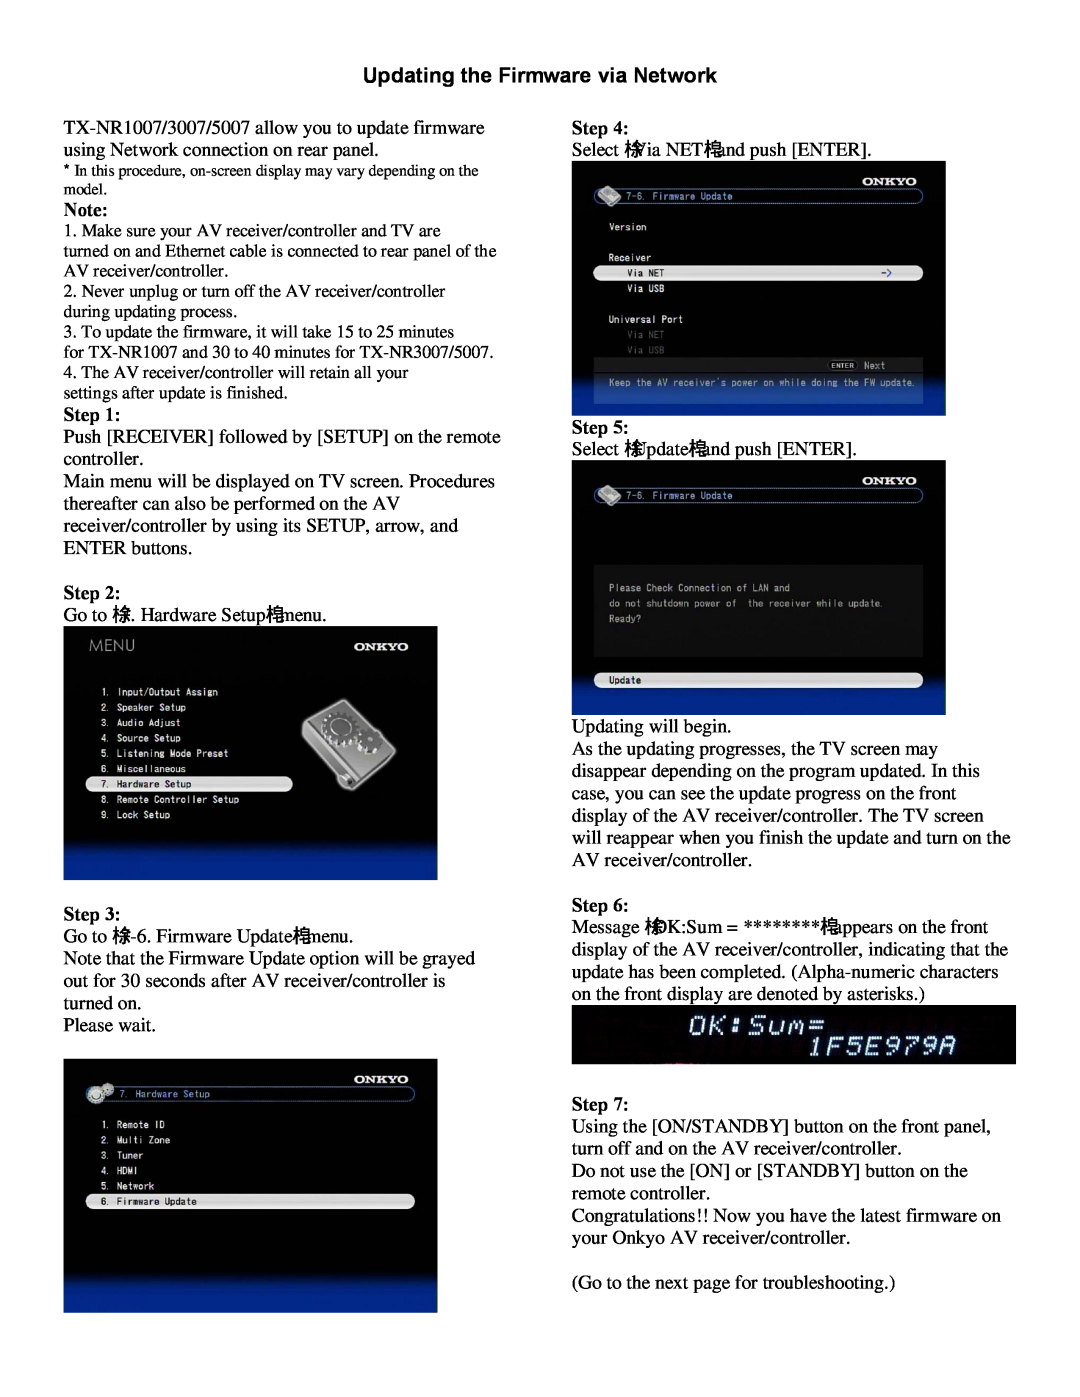 Onkyo TXNR1007, PR-SC5507, TXNR3007 manual Updating the Firmware via Network 